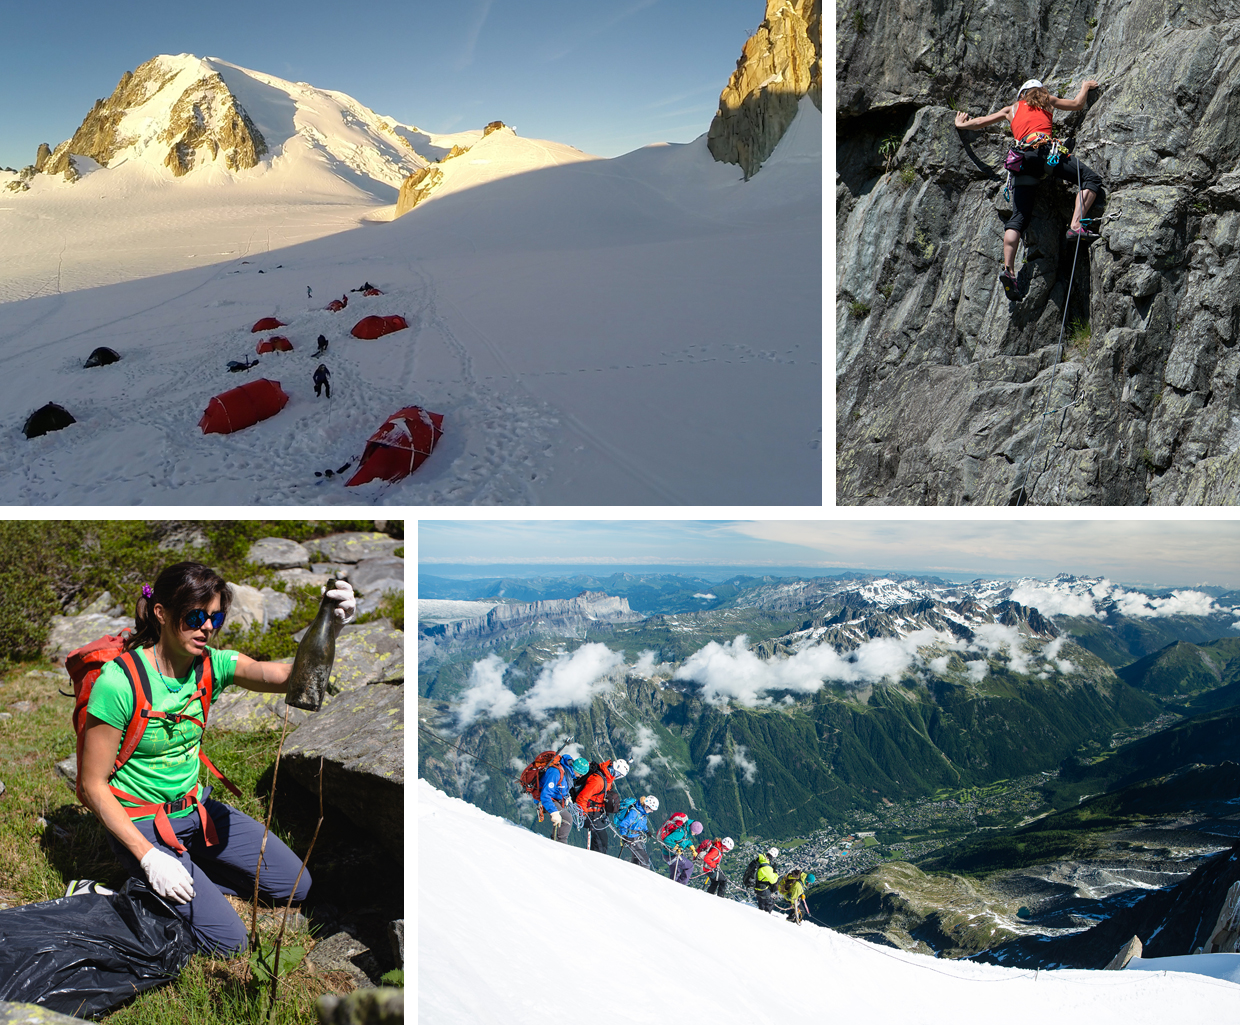 Arc’teryx Alpine Academy returns to the Alps